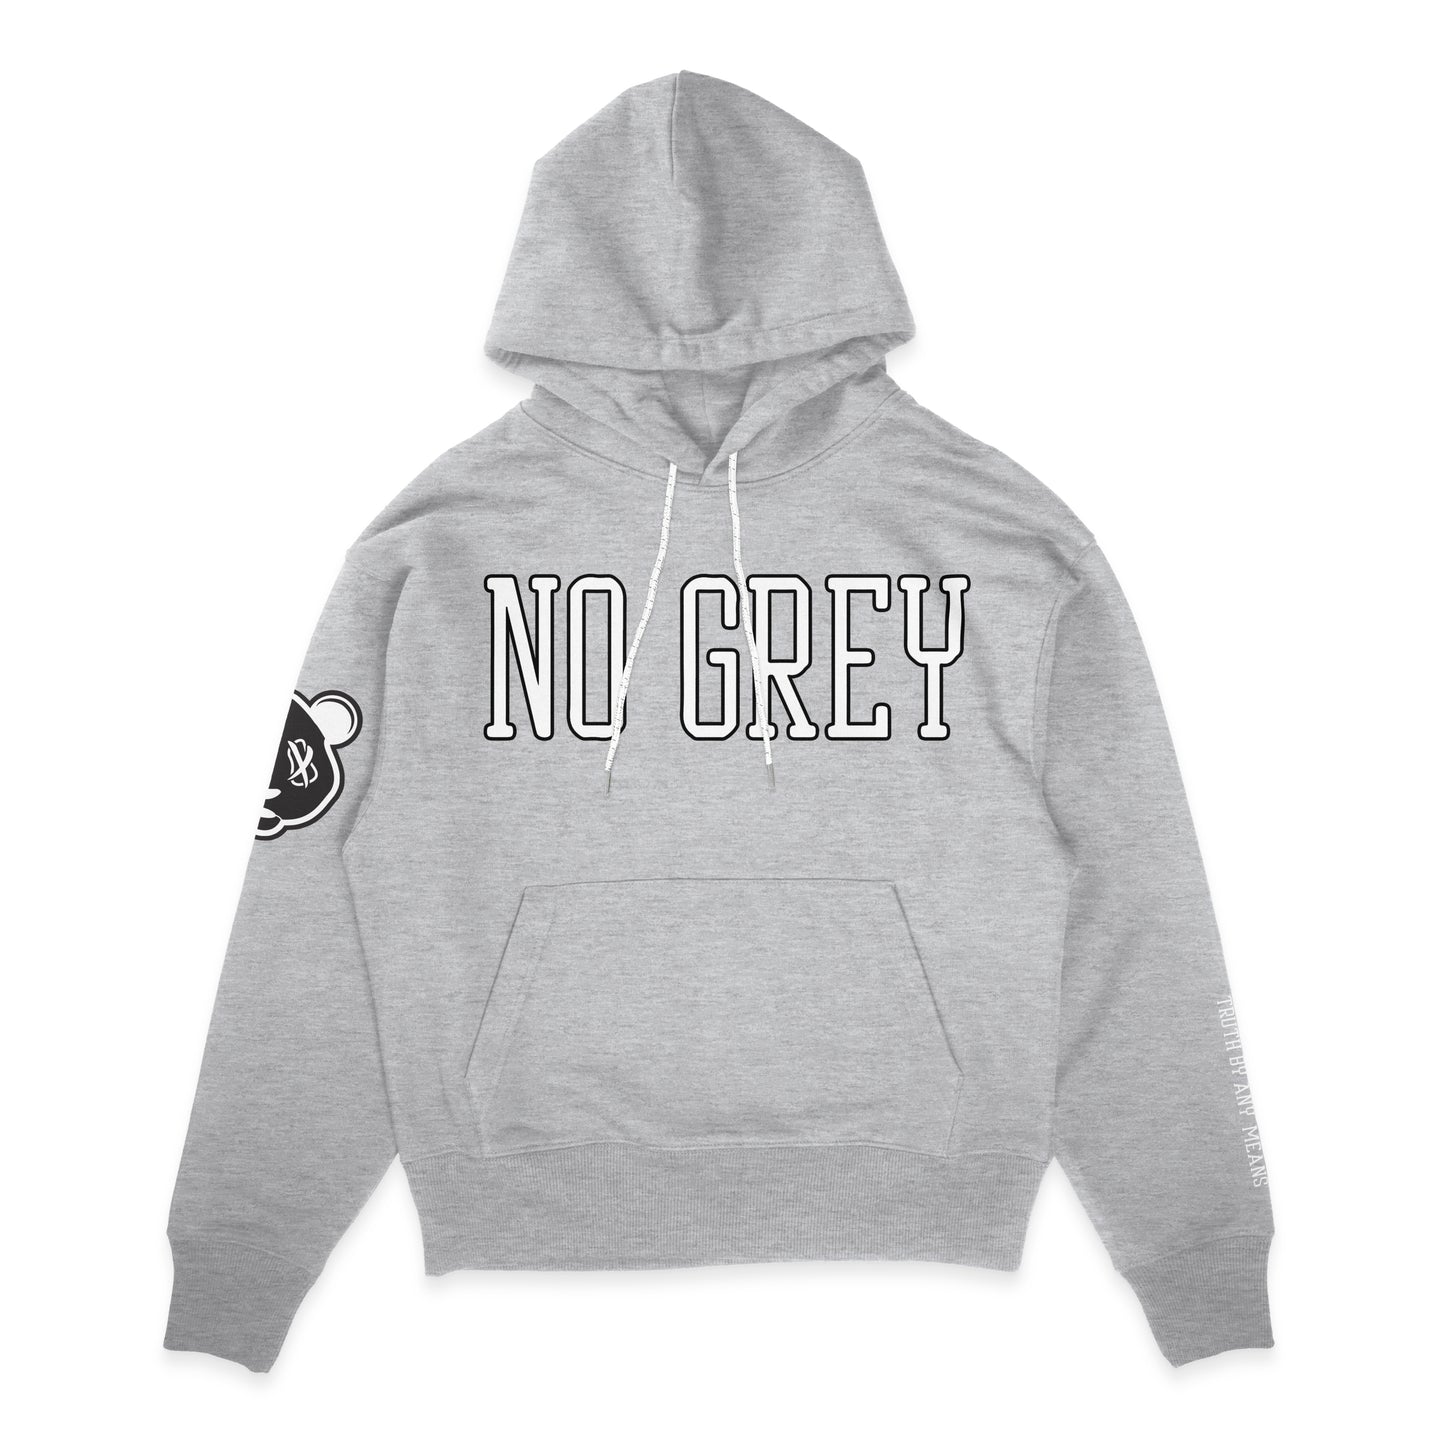 No Grey - Premium Pullover Hoodie (Heather Grey)